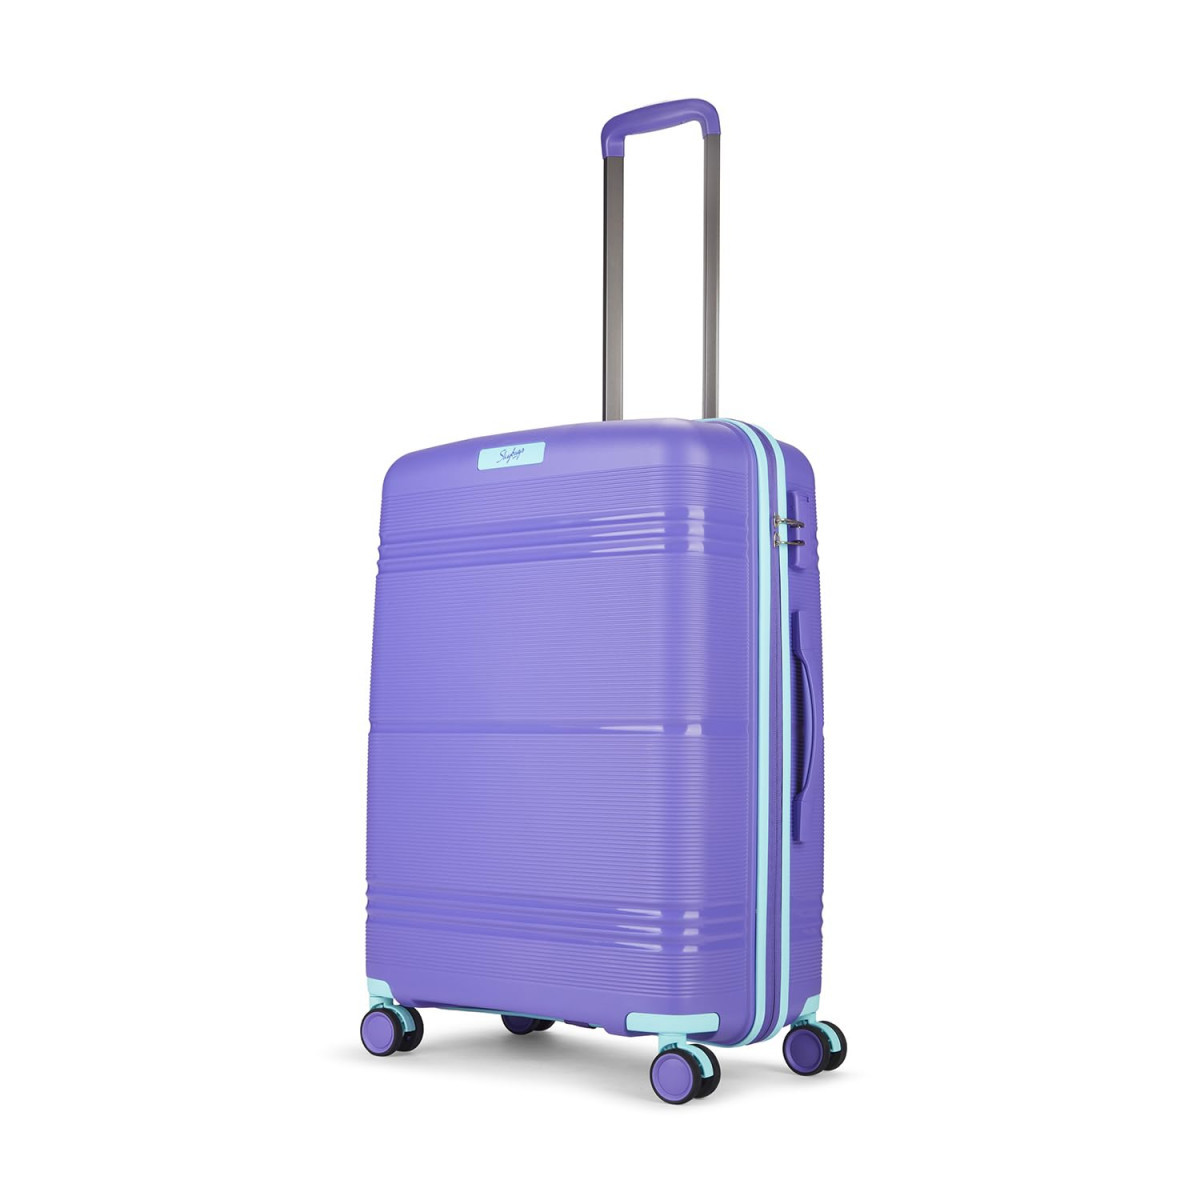 Skybags Paratrip Medium Size Hard Luggage 67 cm  Polypropylene Luggage Trolley with 8 Wheels Purple Oppulence  Unisex